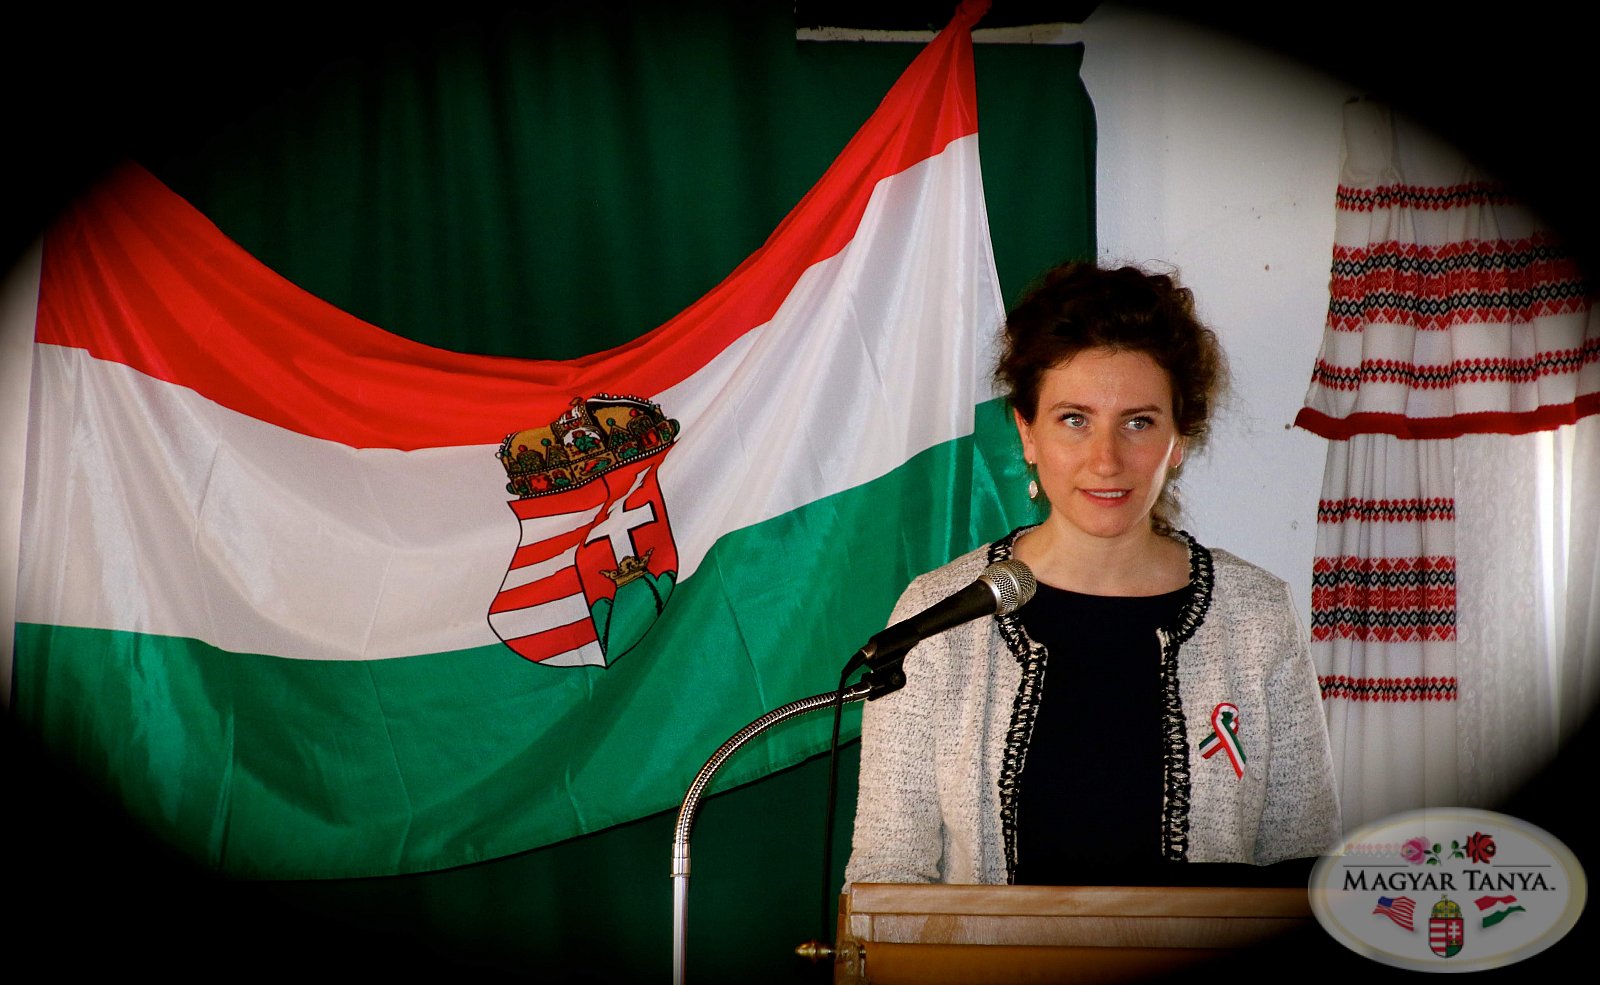 Commemoration of Hungarian Revolution of 1848